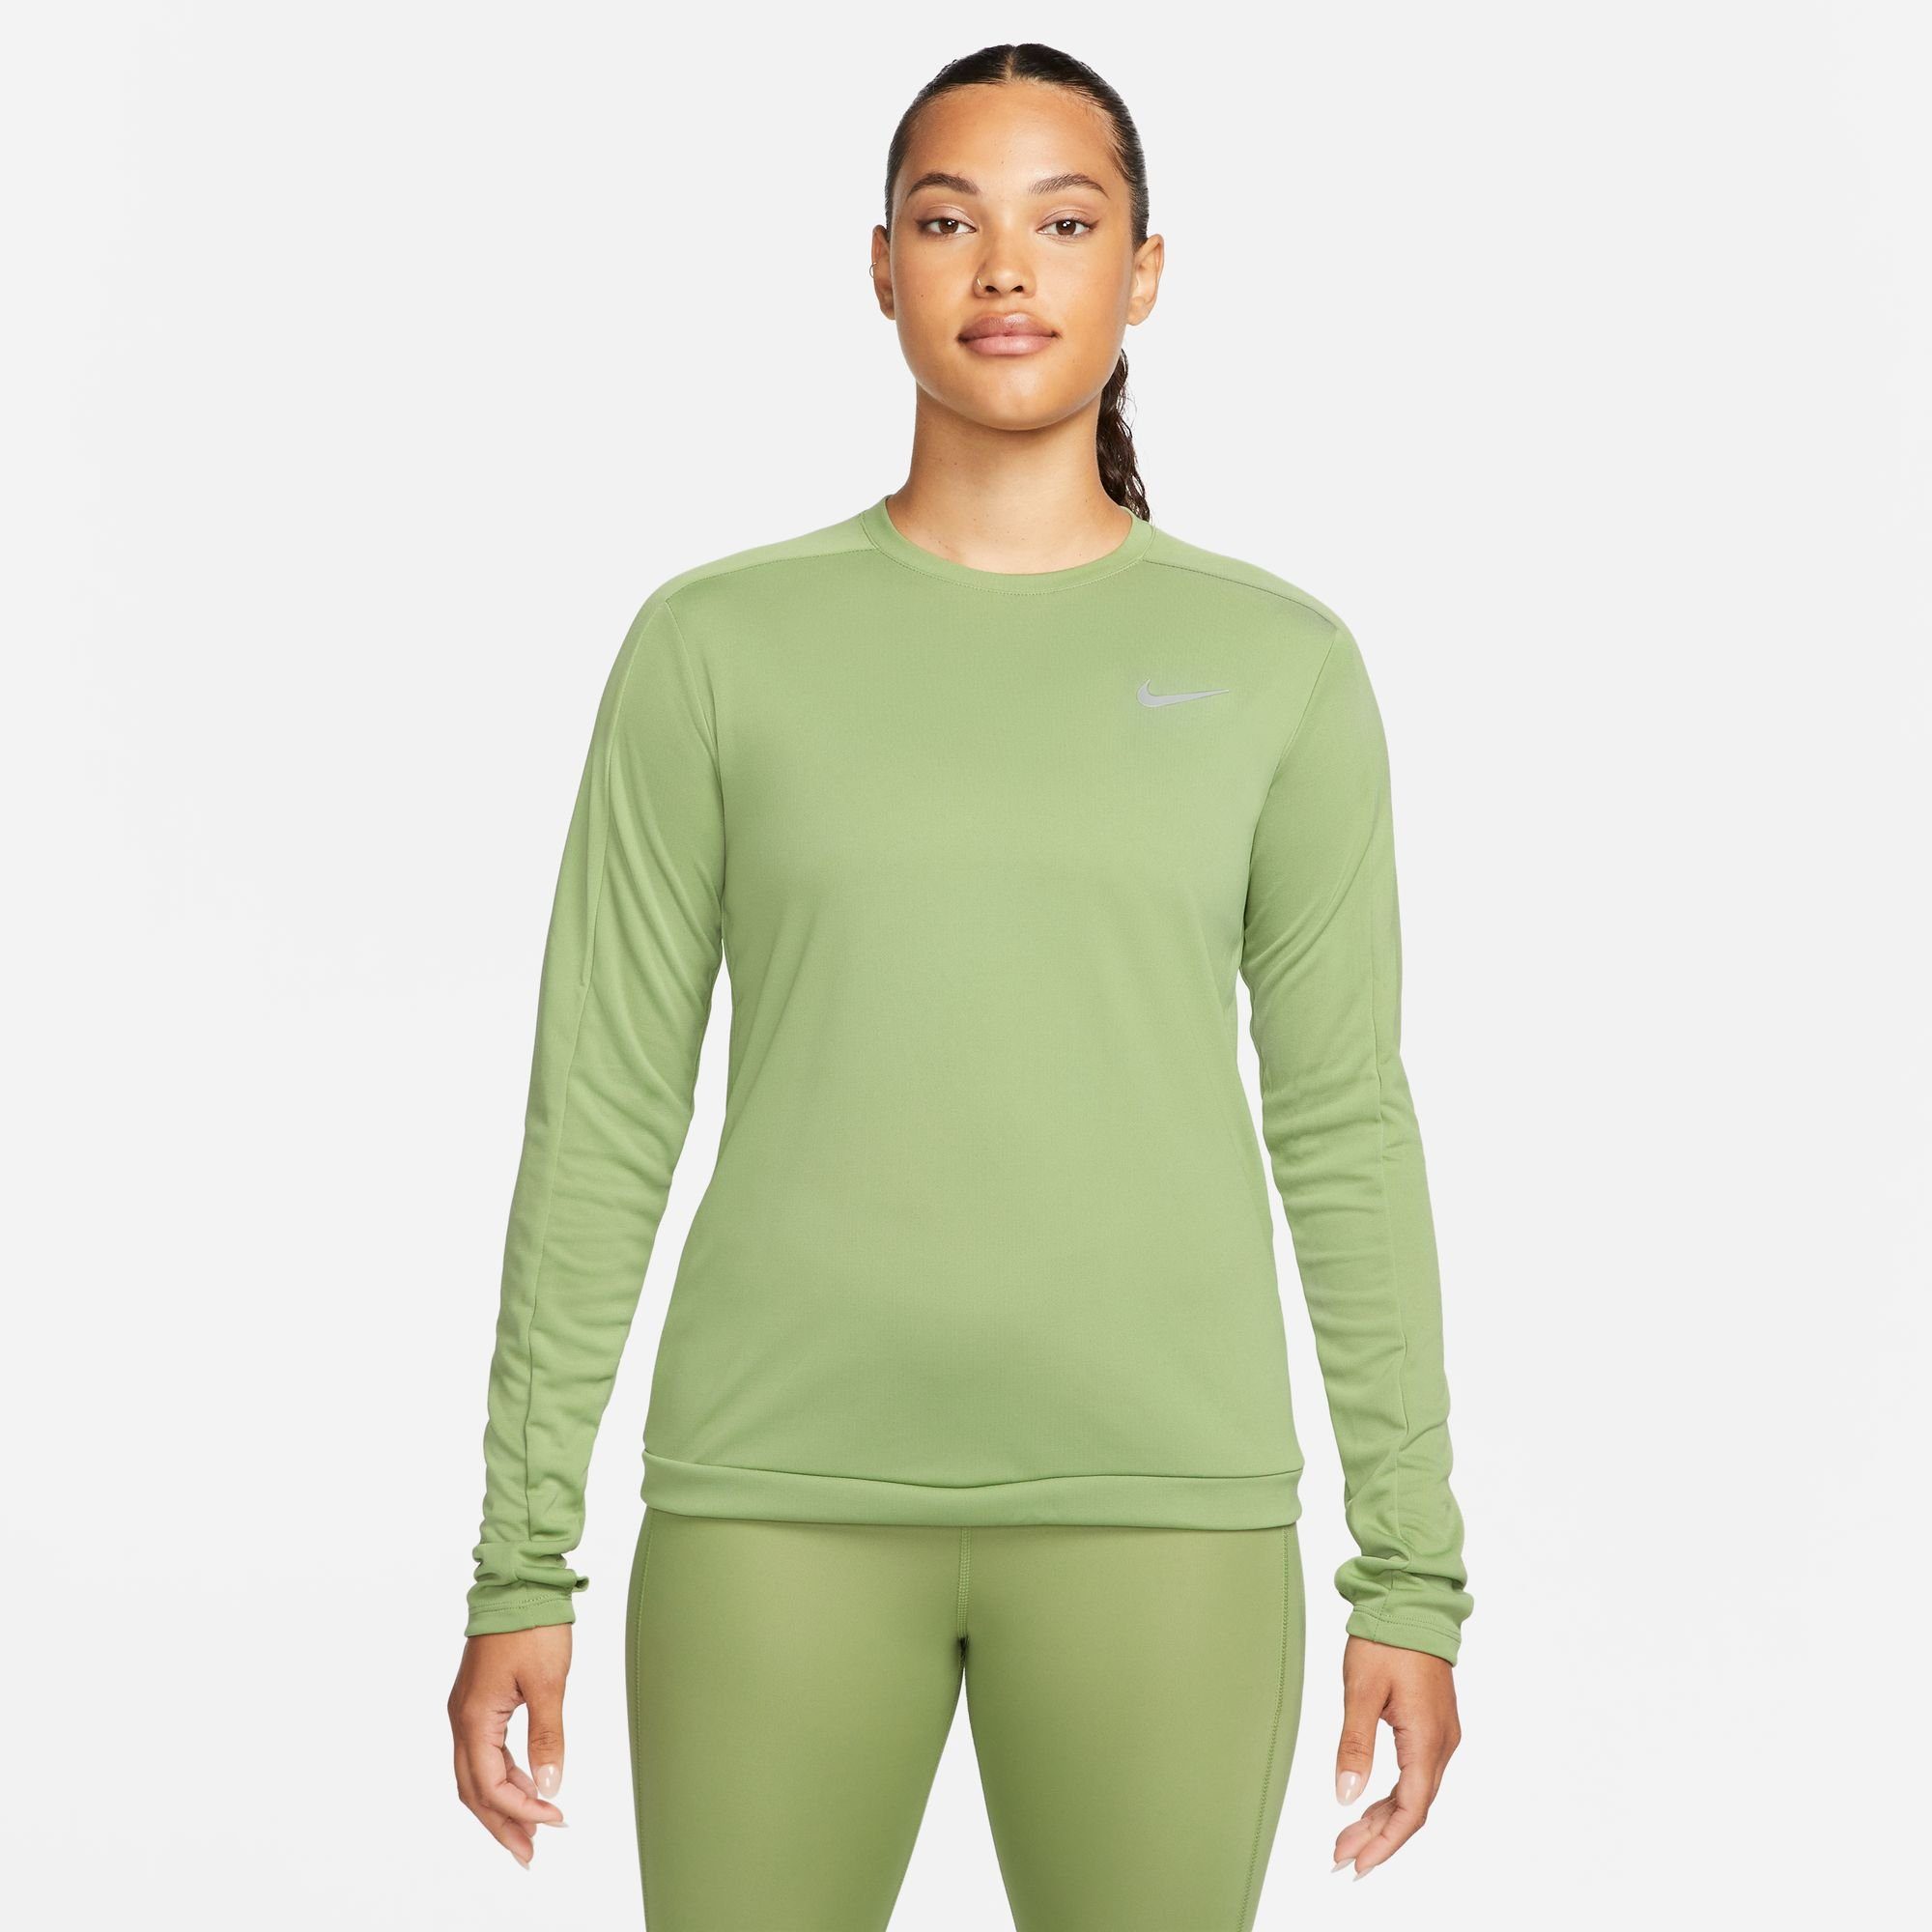 Nike CREW-NECK RUNNING grün TOP Laufshirt WOMEN'S DRI-FIT